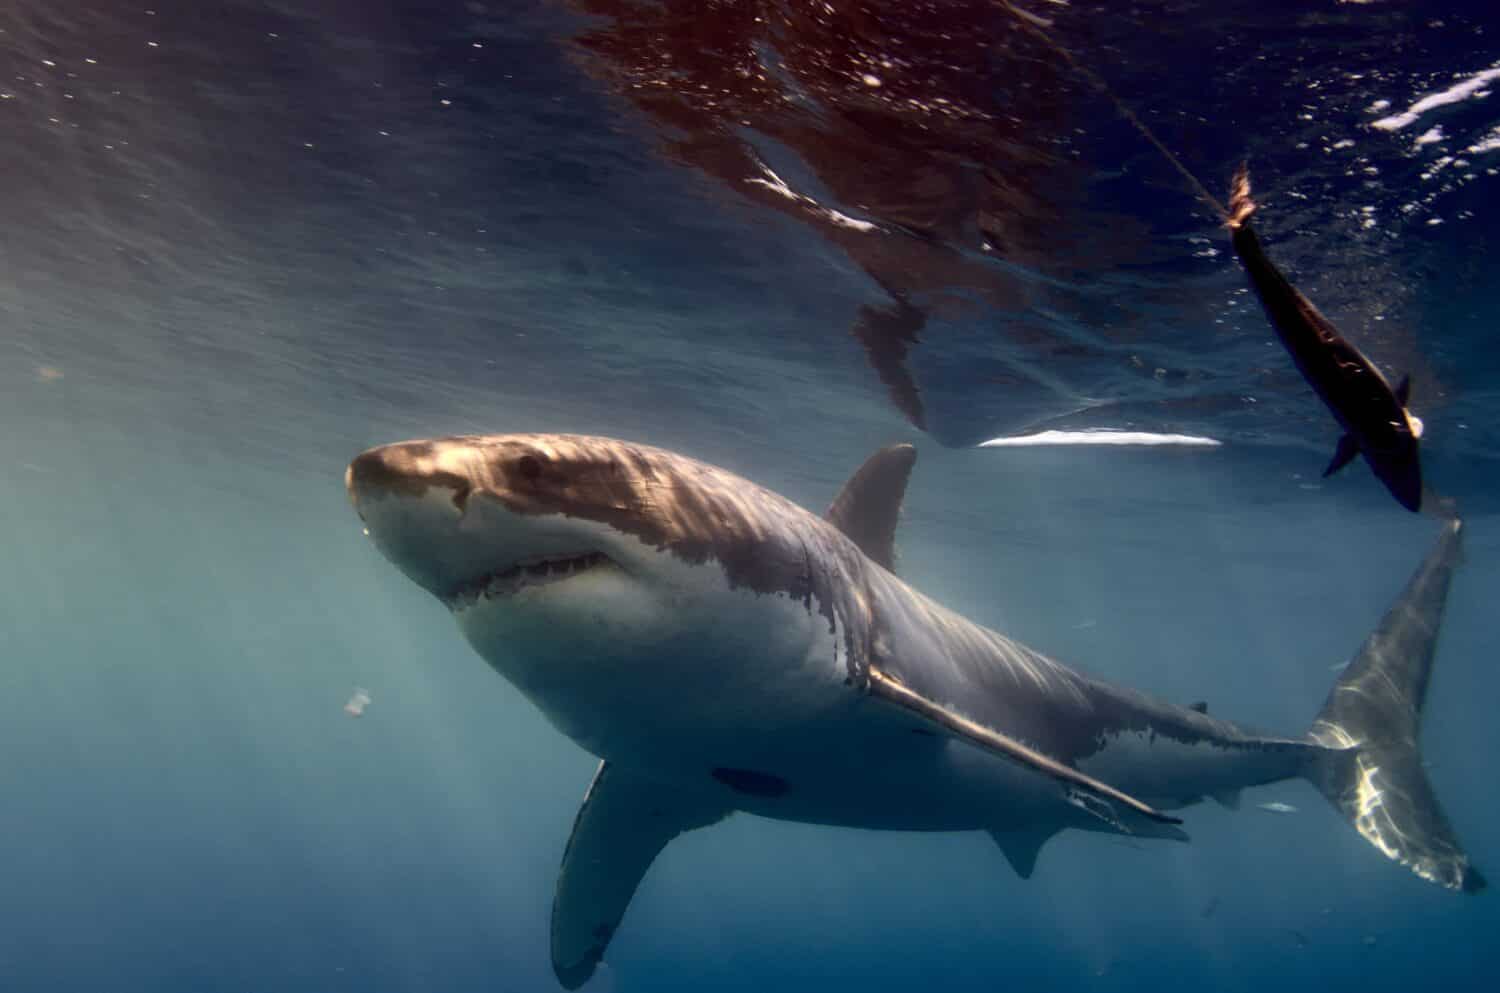 A shot of the beautiful wild great white shark underwater